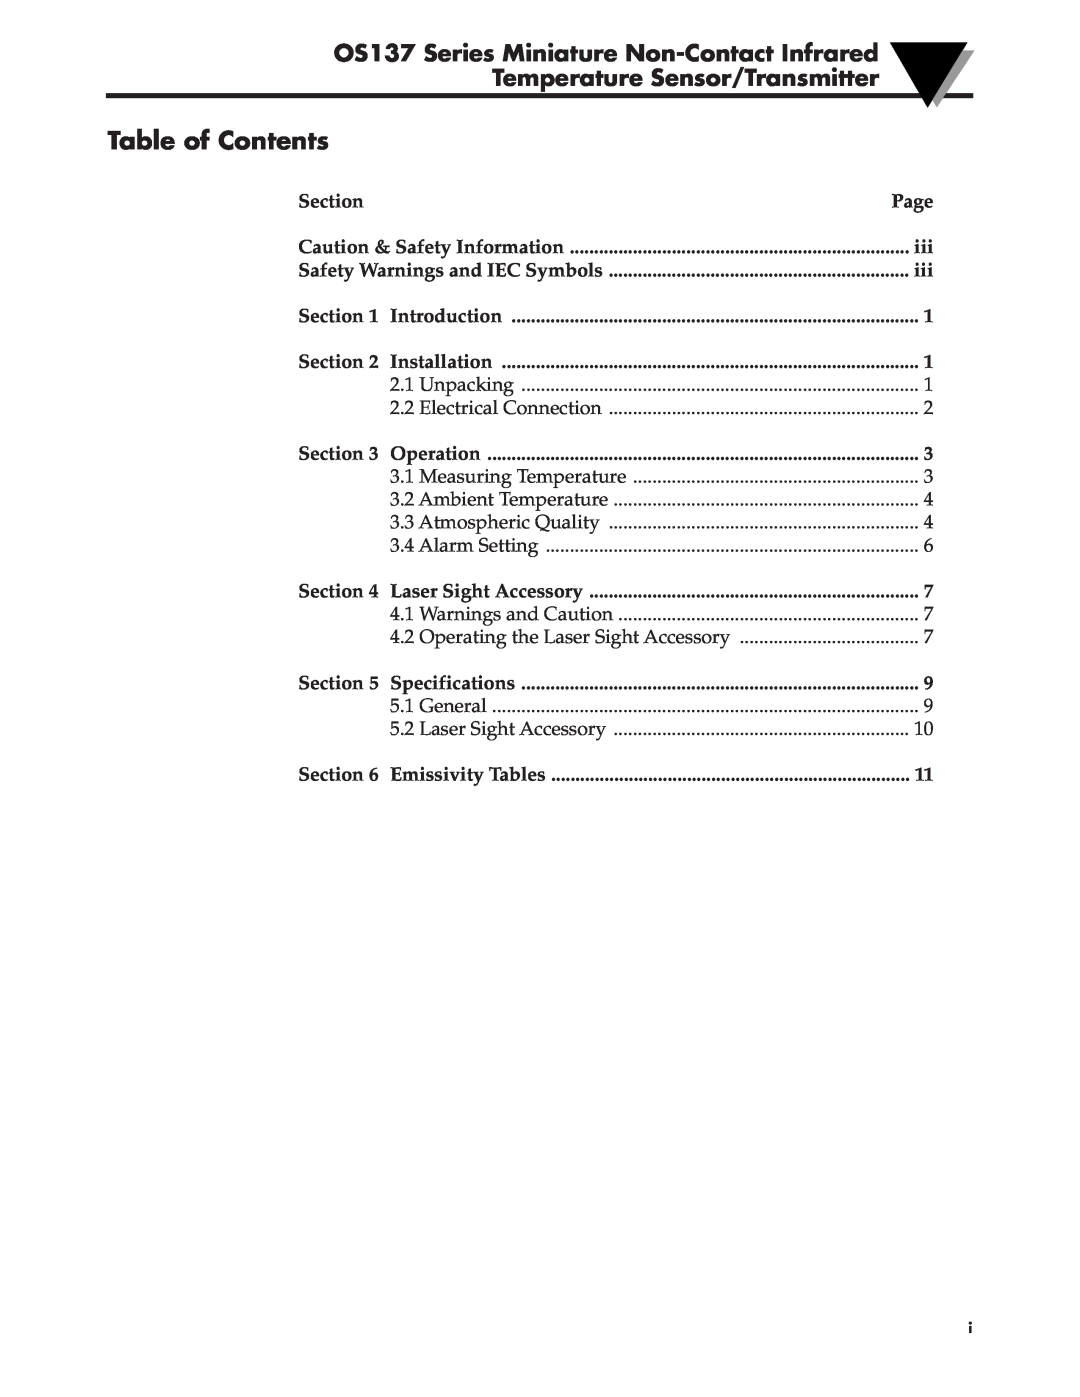 Omega manual Table of Contents, OS137 Series Miniature Non-ContactInfrared, Temperature Sensor/Transmitter 